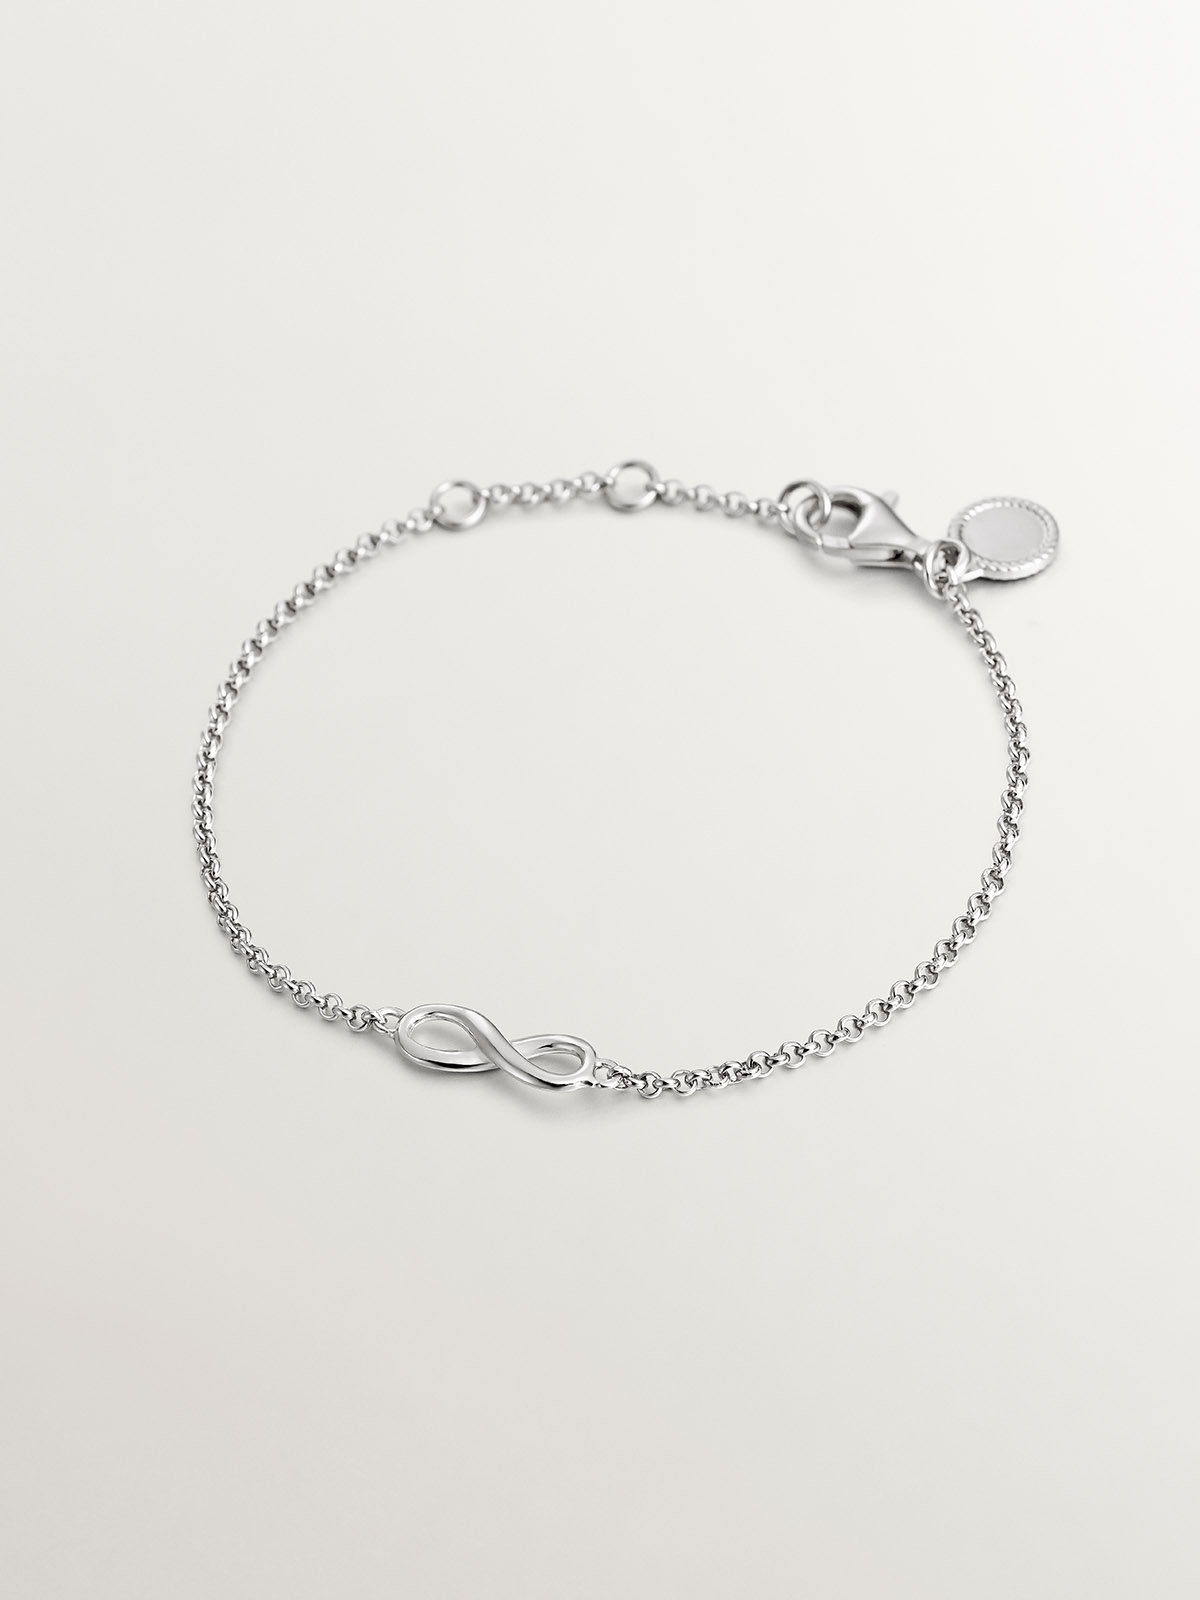 925 Silver Bracelet with Infinity